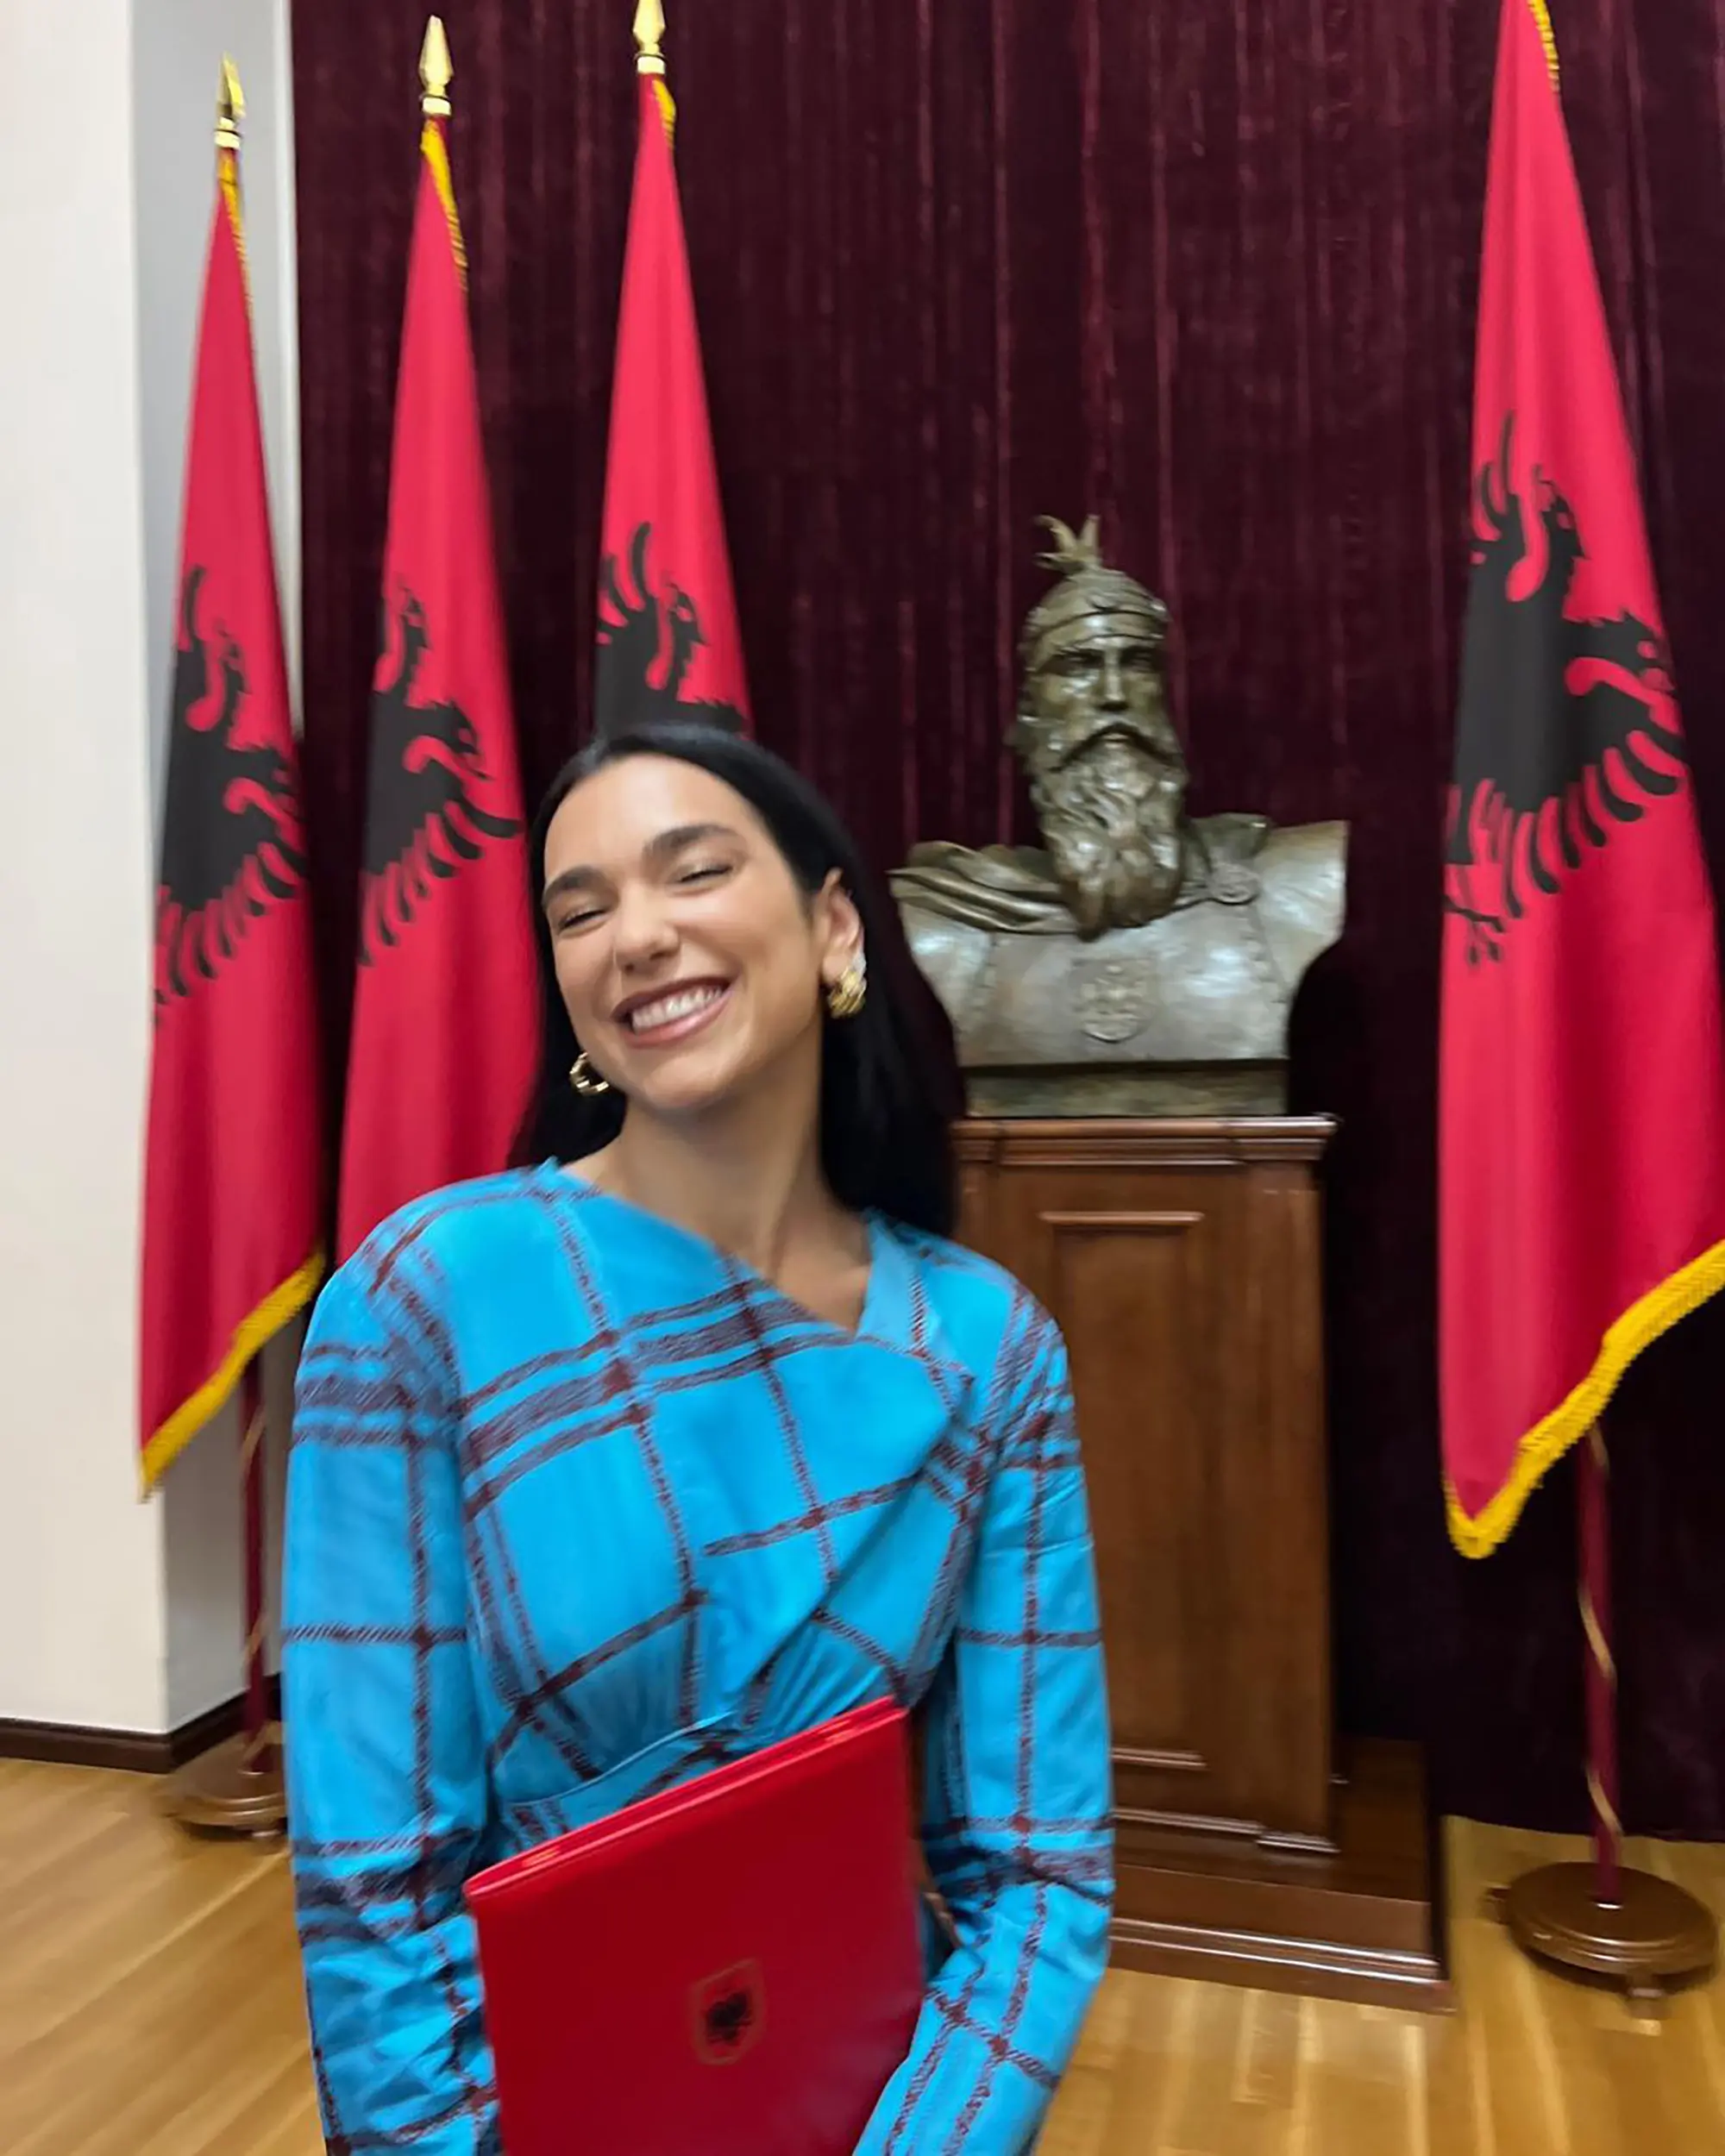 Dua Lipa ana yurdu Arnavutluk’un vatandaşı da oldu